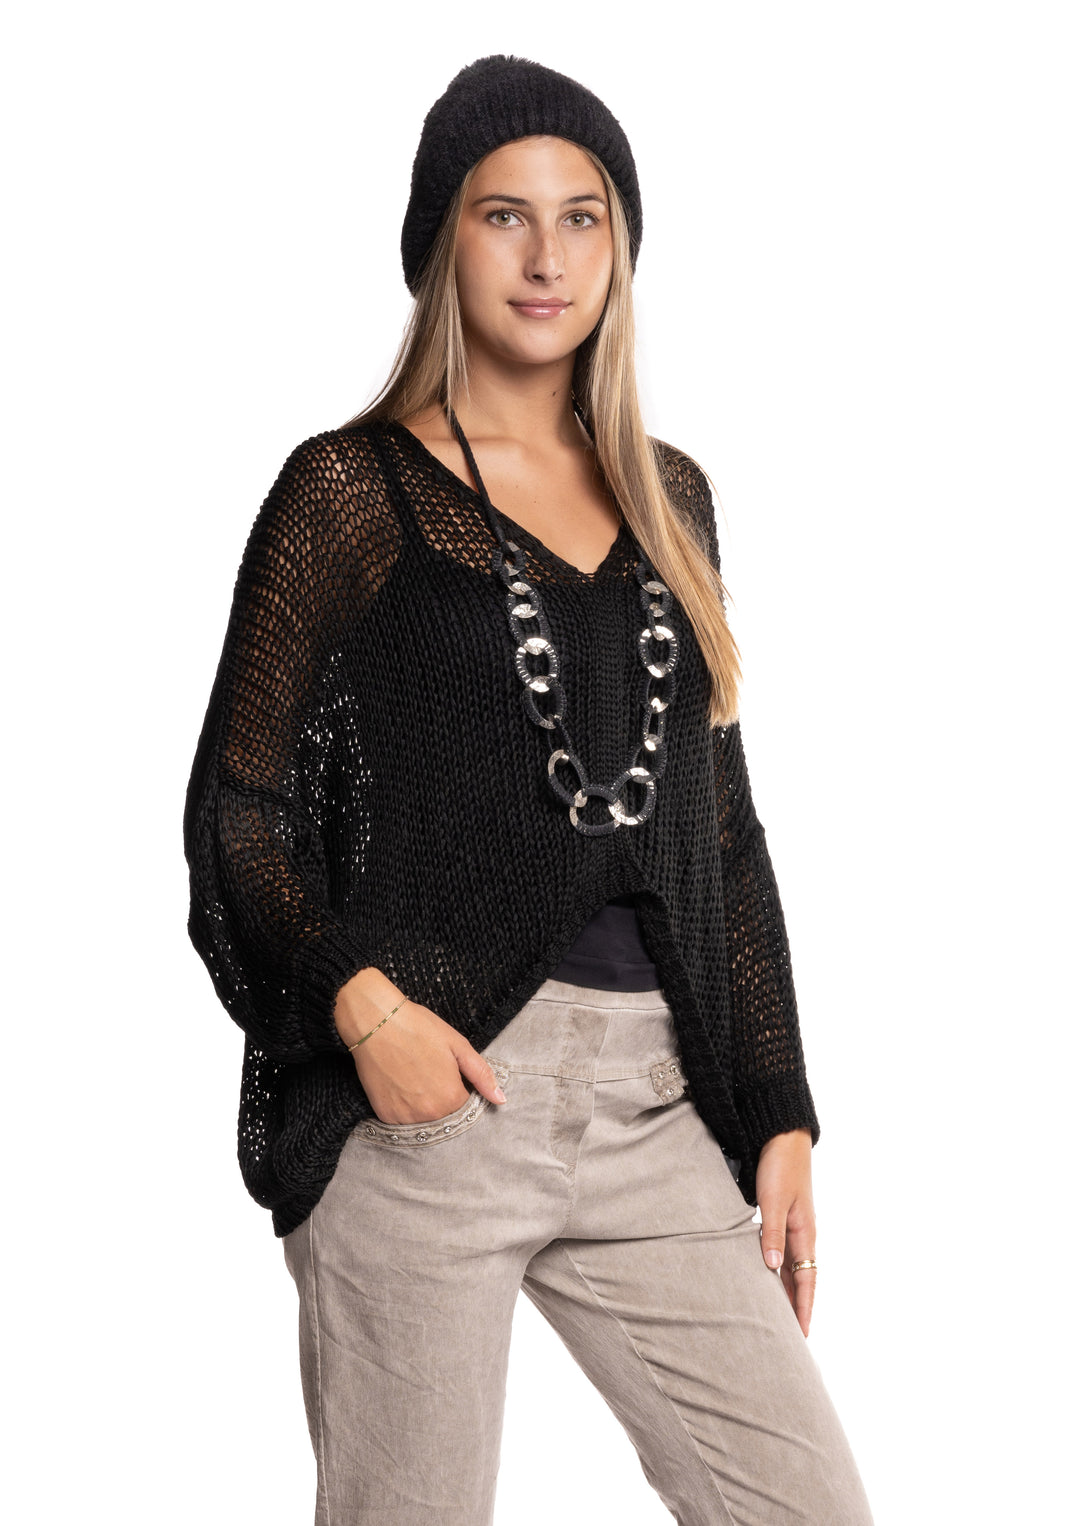 Rossella Knit Top in Onyx - Imagine Fashion